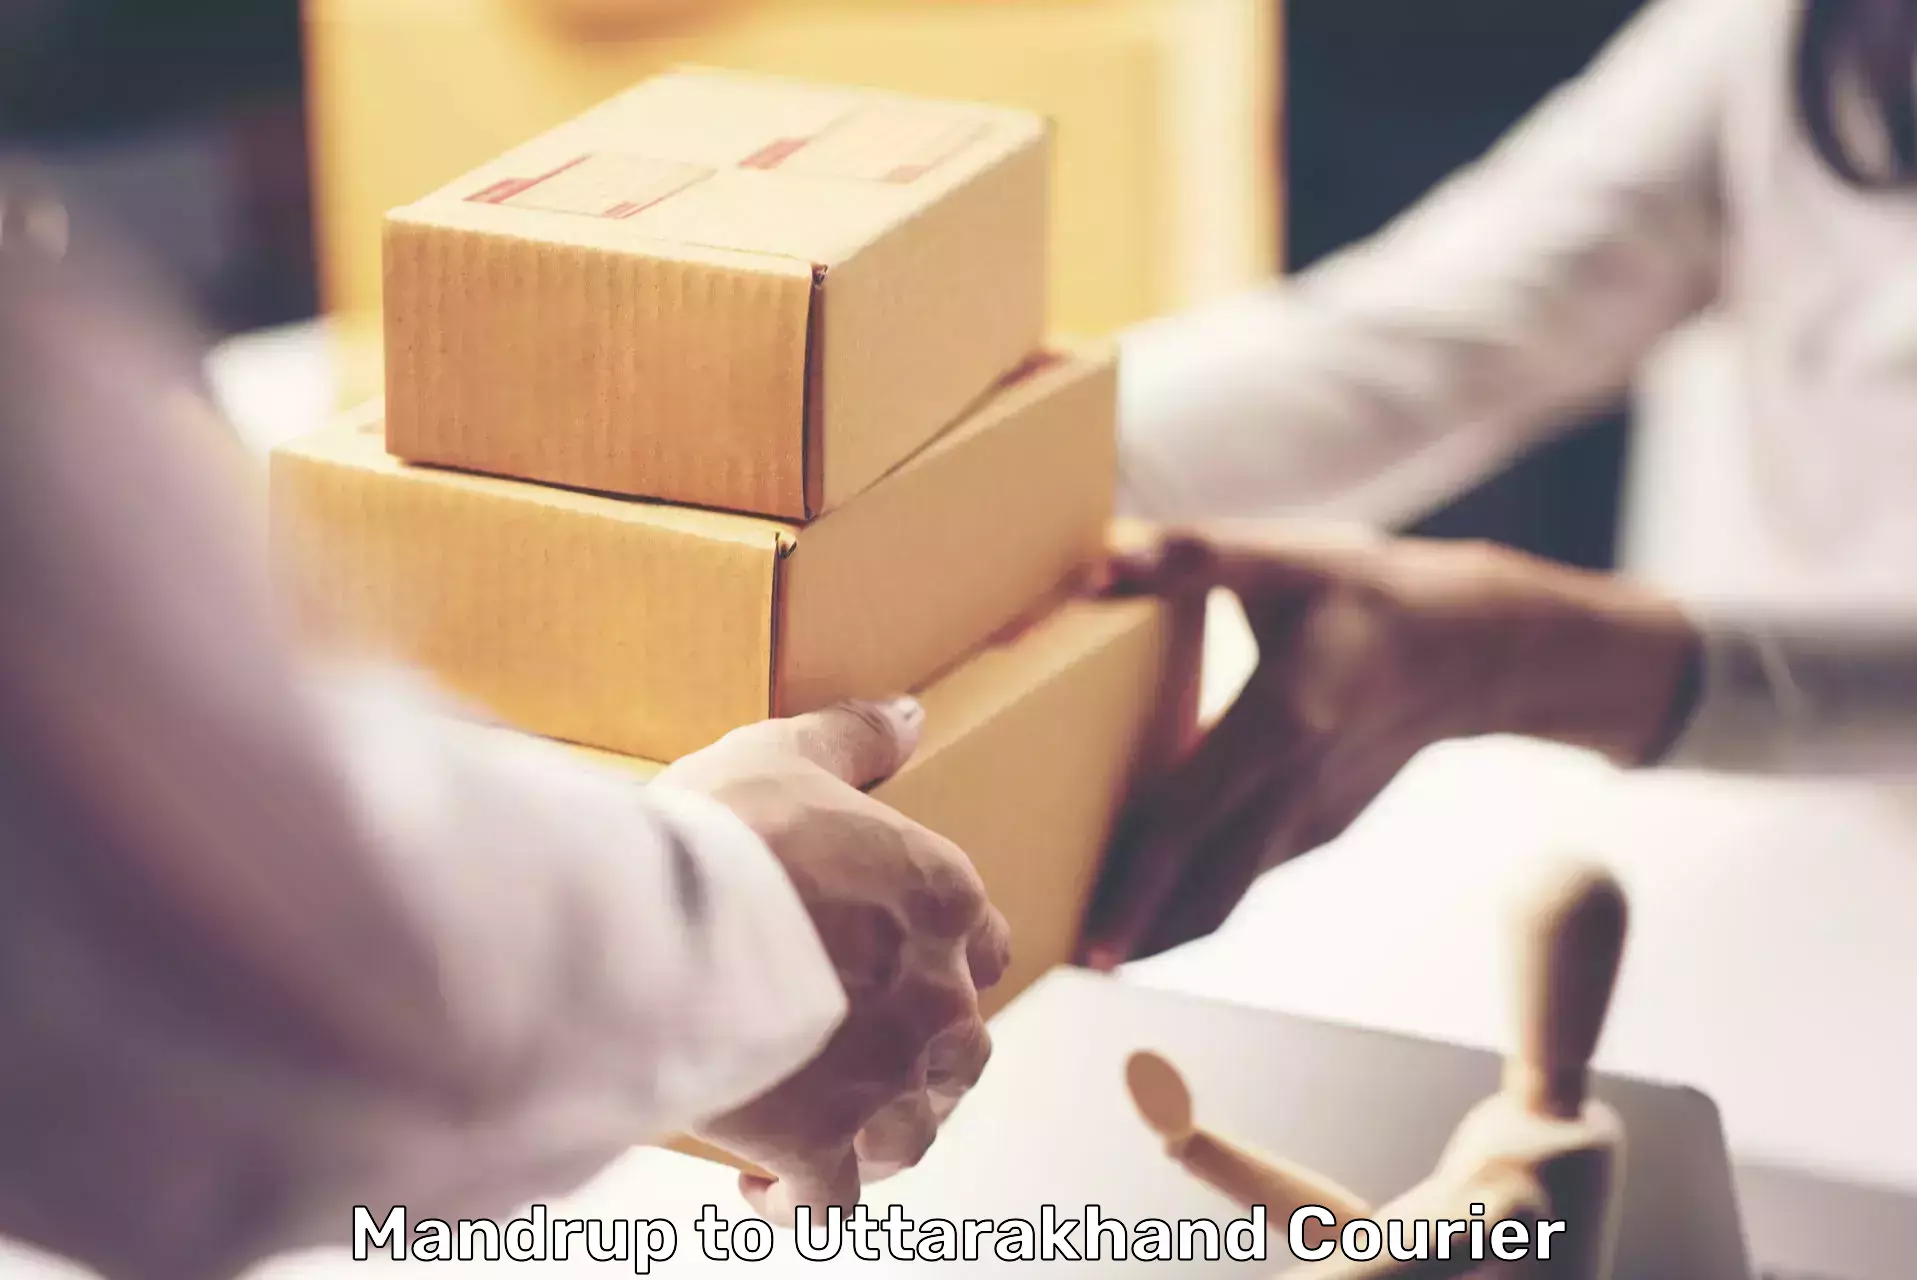 E-commerce logistics support Mandrup to Uttarakhand